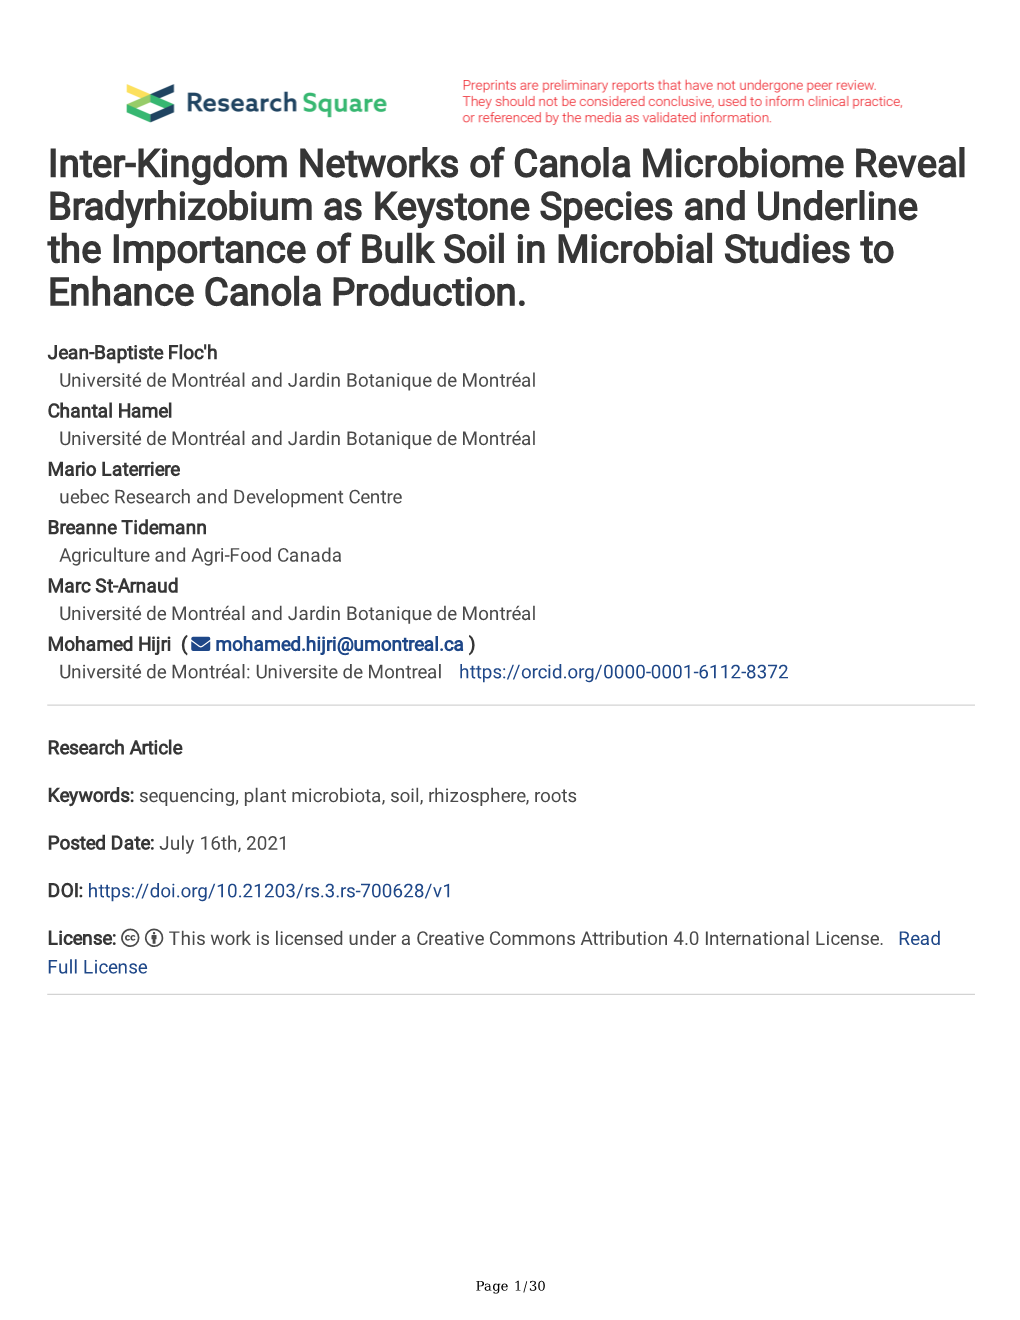 Inter-Kingdom Networks of Canola Microbiome Reveal Bradyrhizobium